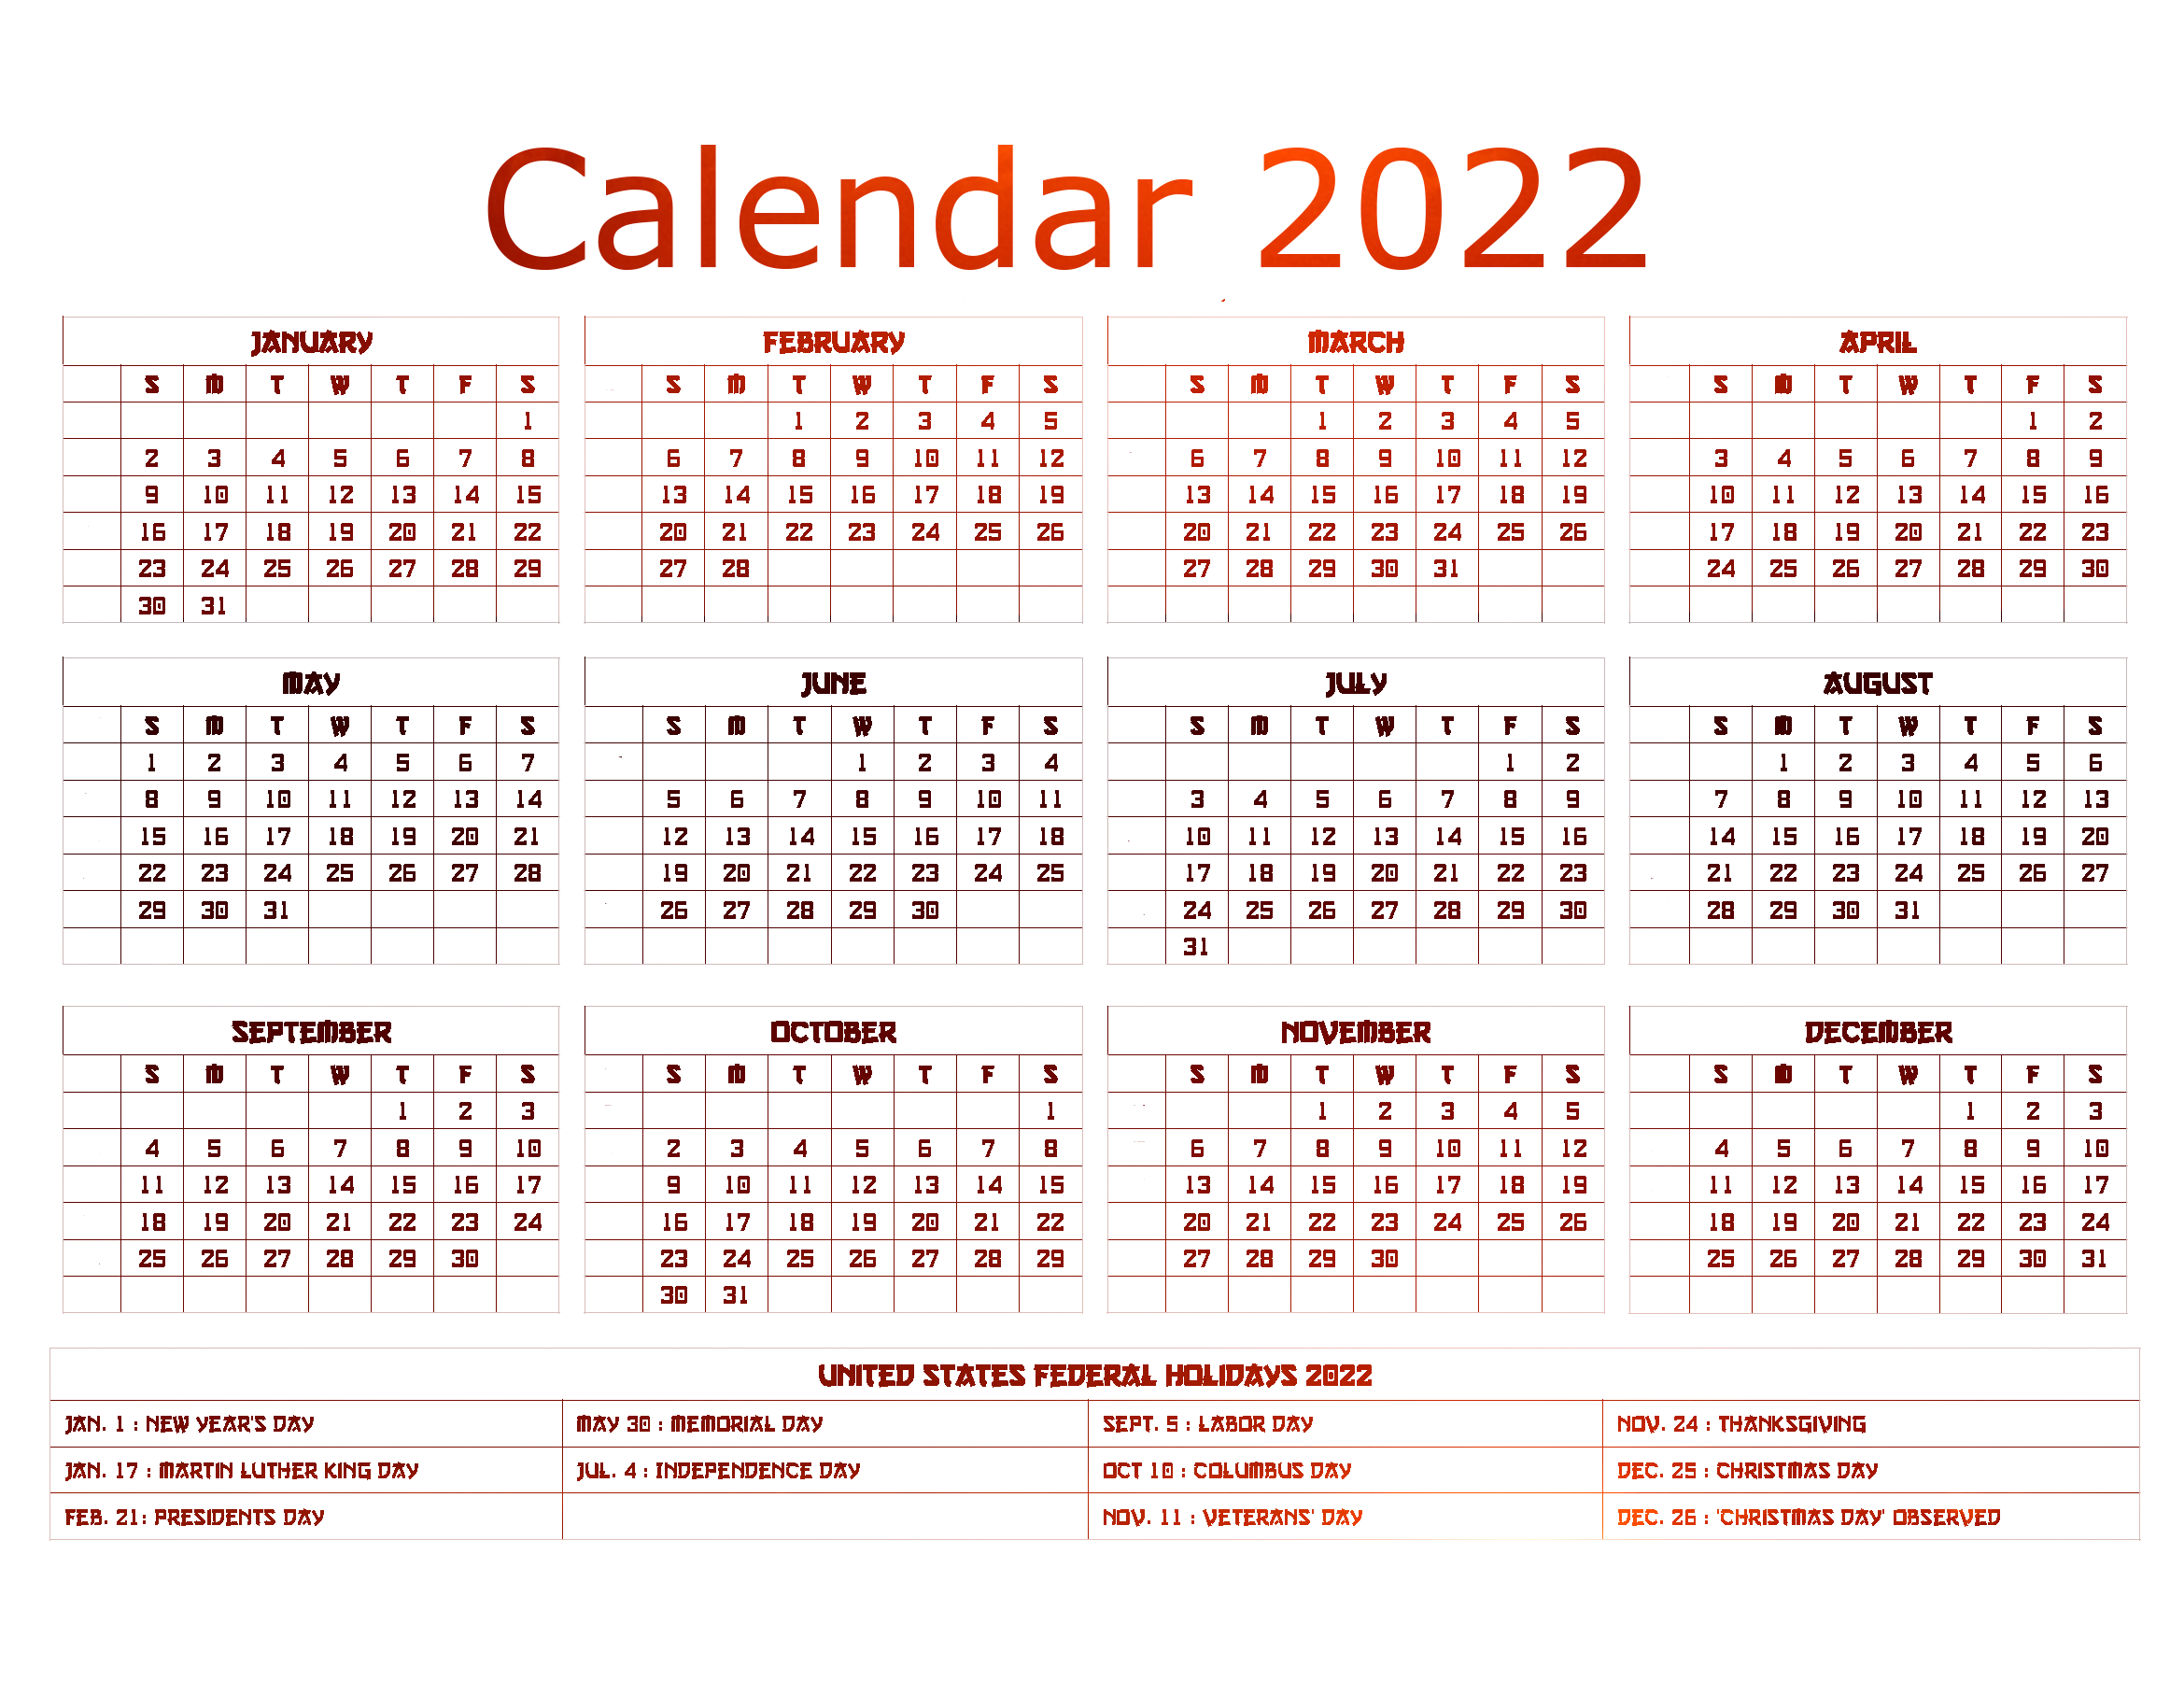 Nc State Calendar 2022 - Customize and Print